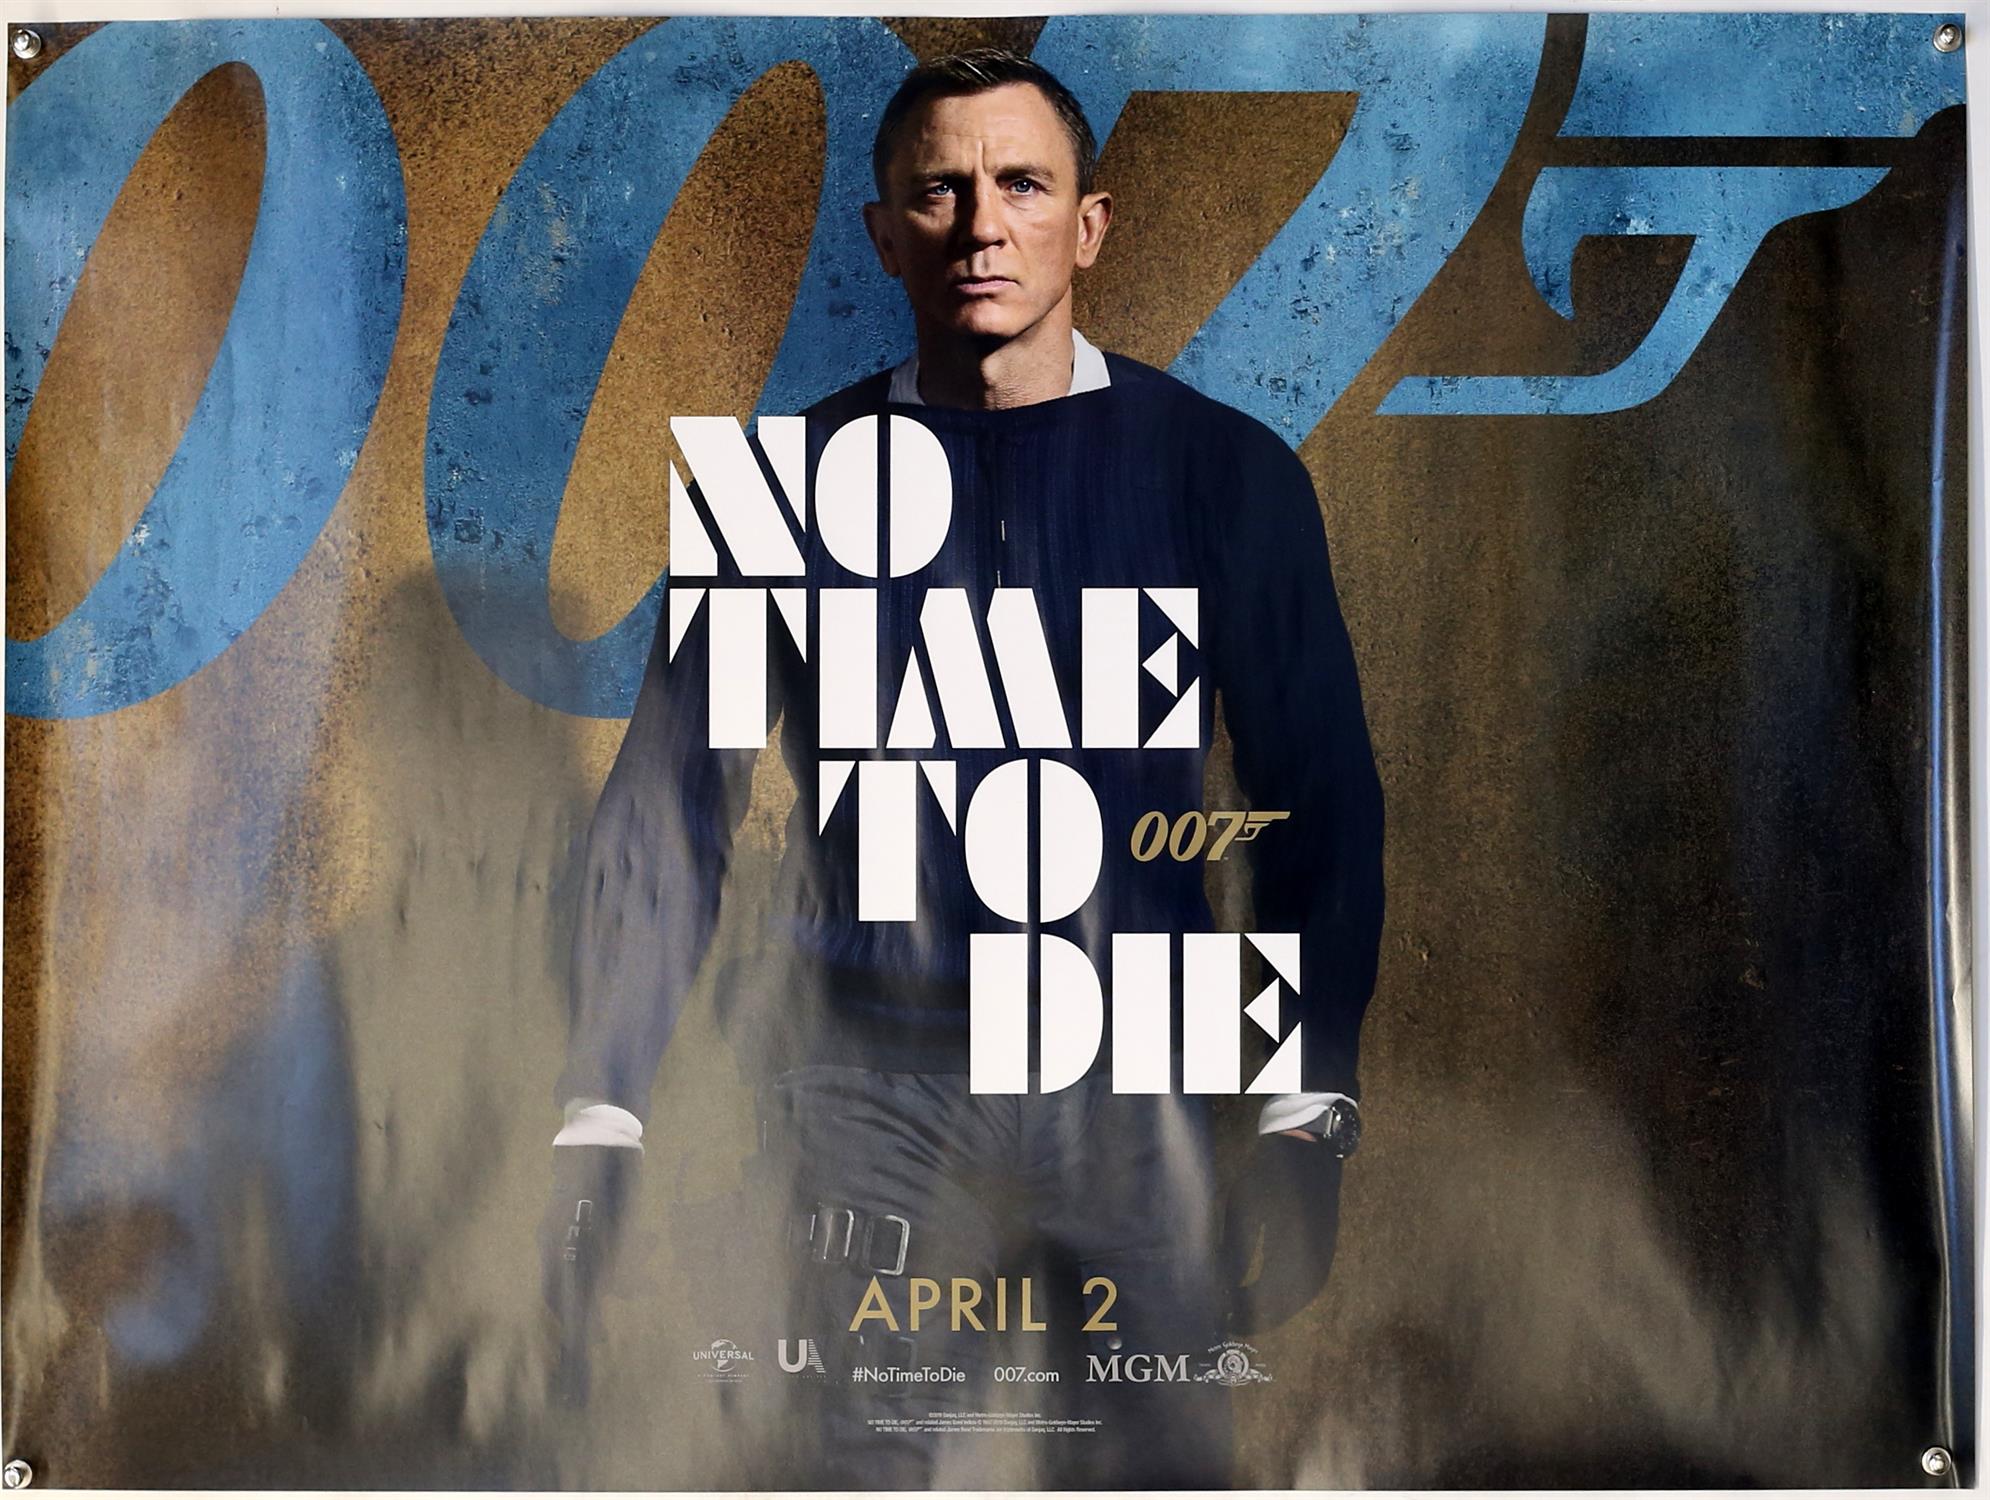 James Bond No Time To Die (2020) Main April British Quad film poster, showing an image of Daniel